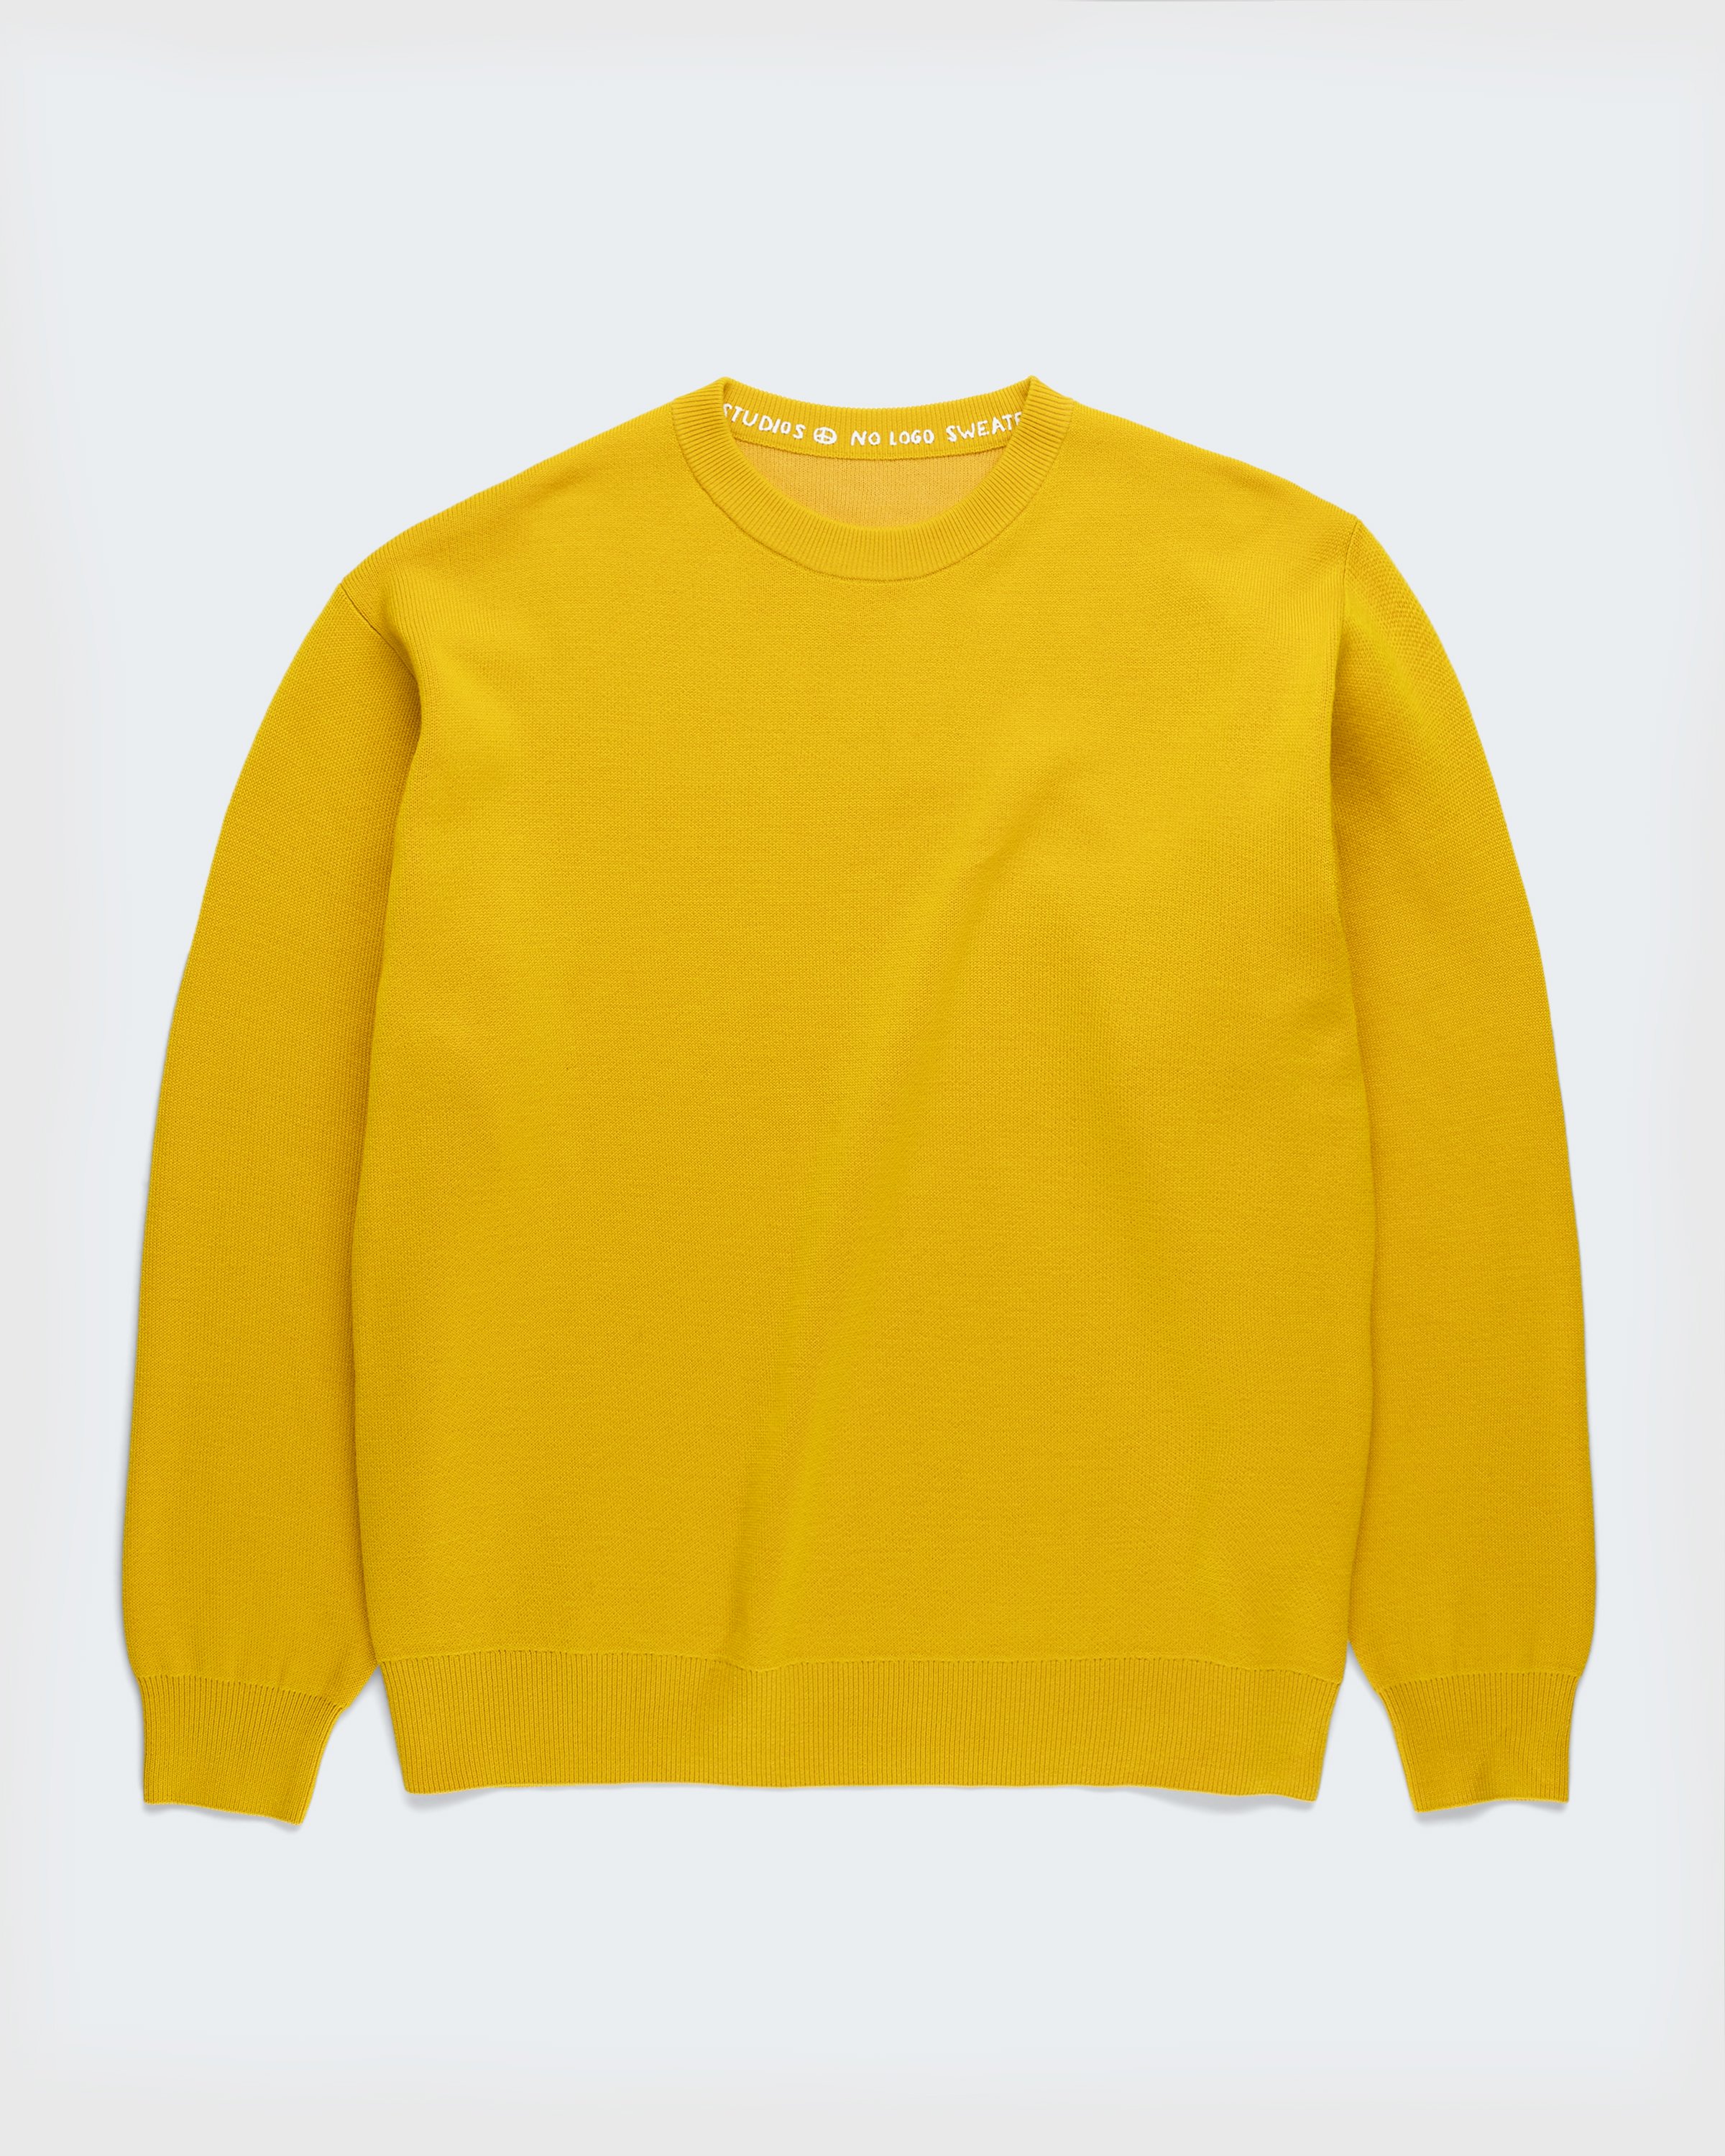 Acne Studios – Merino Wool Crewneck Sweater Yellow